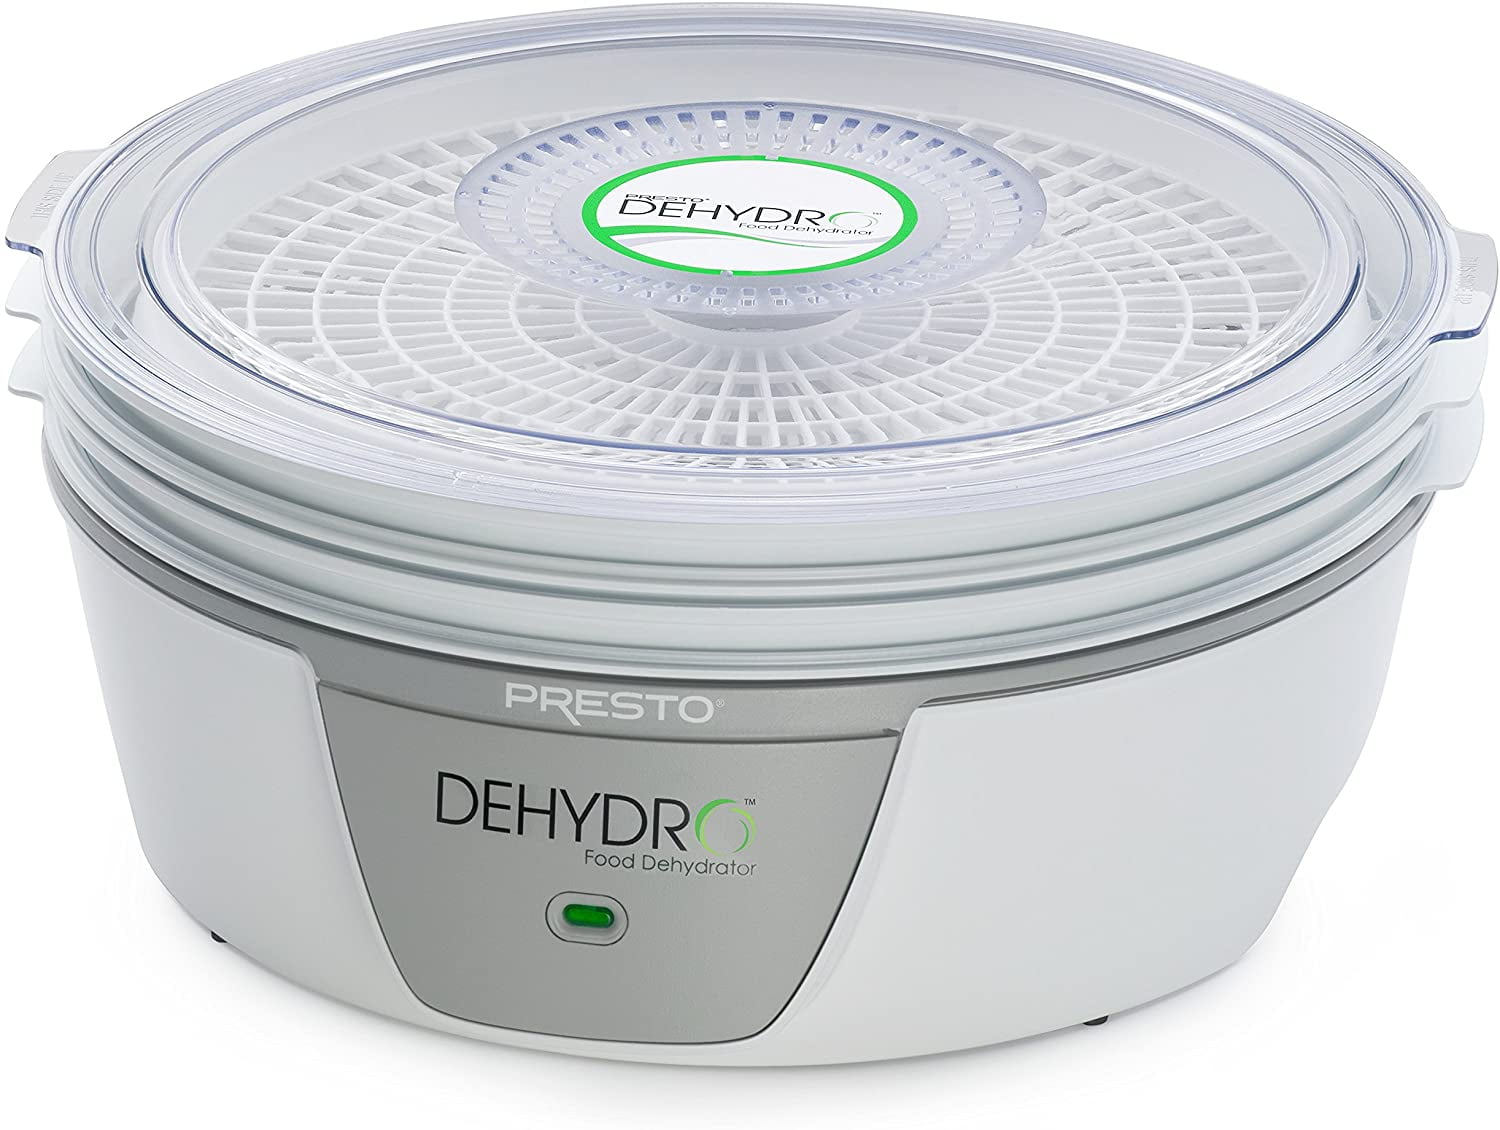 Presto 06300 Dehydro 600W Electric Food Dehydrator - White